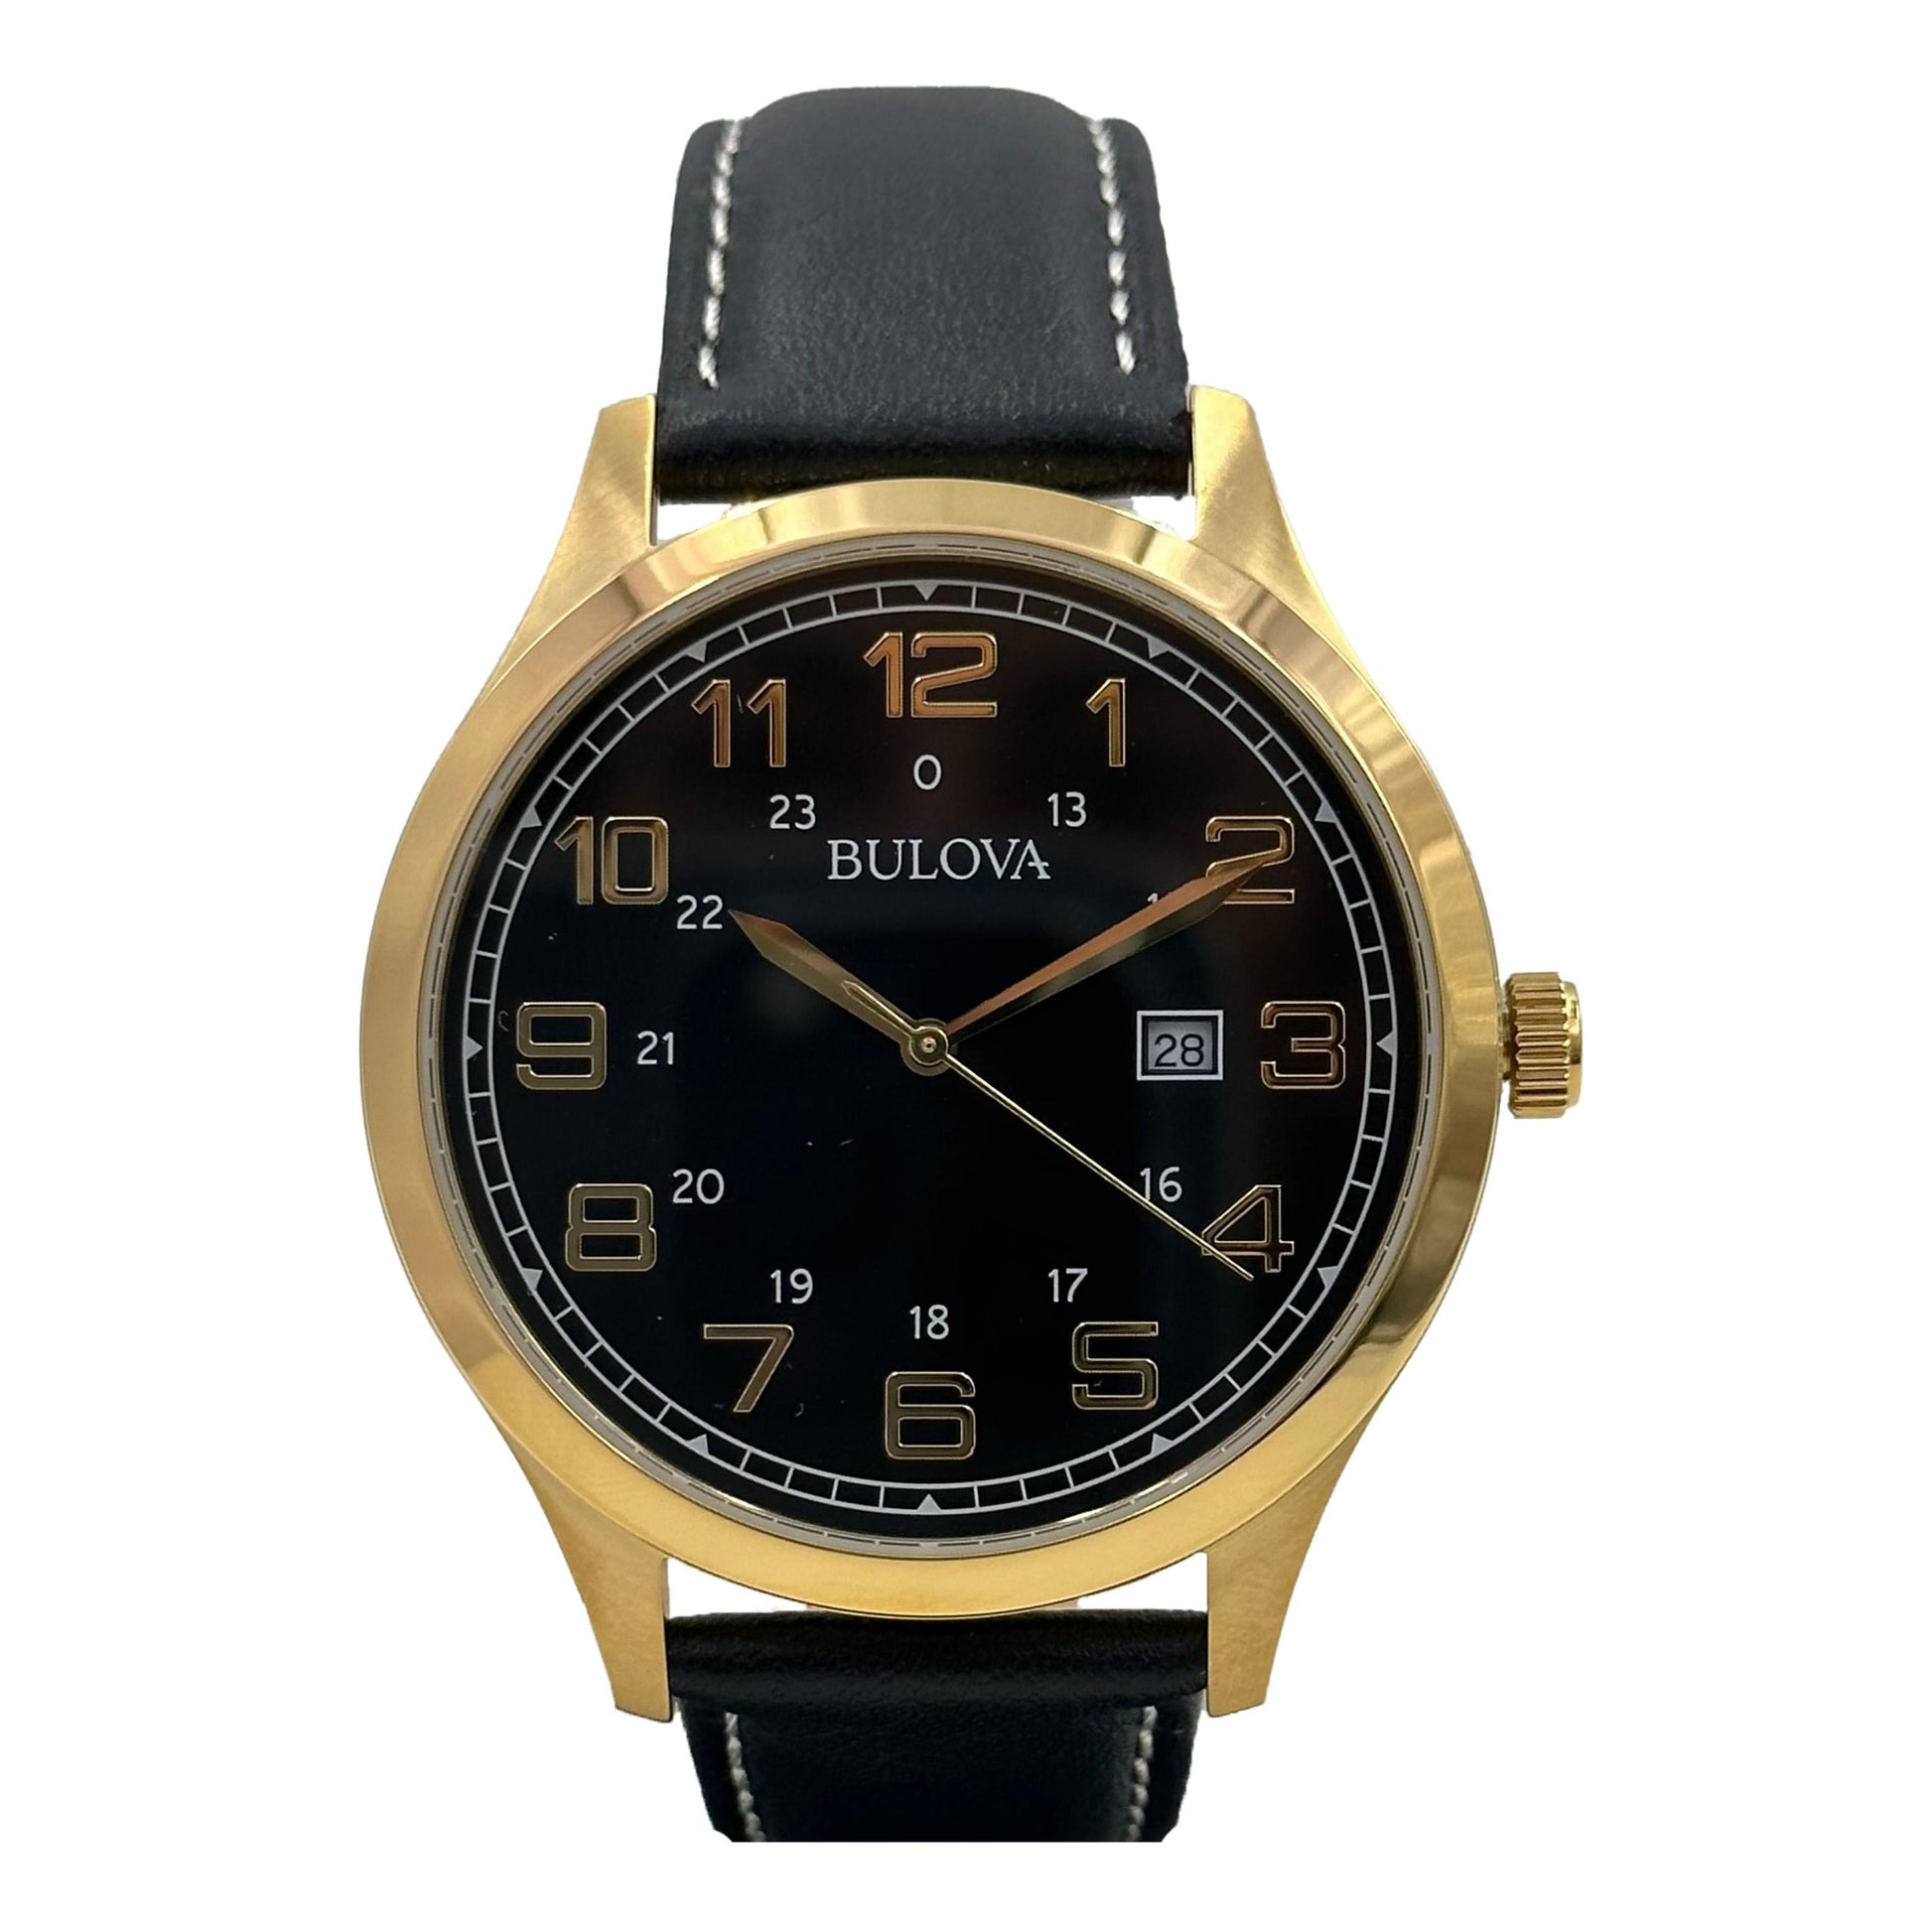 Bulova Men's Gold-Tone Case Black Leather Strap Watch - 971B181 0042429565128